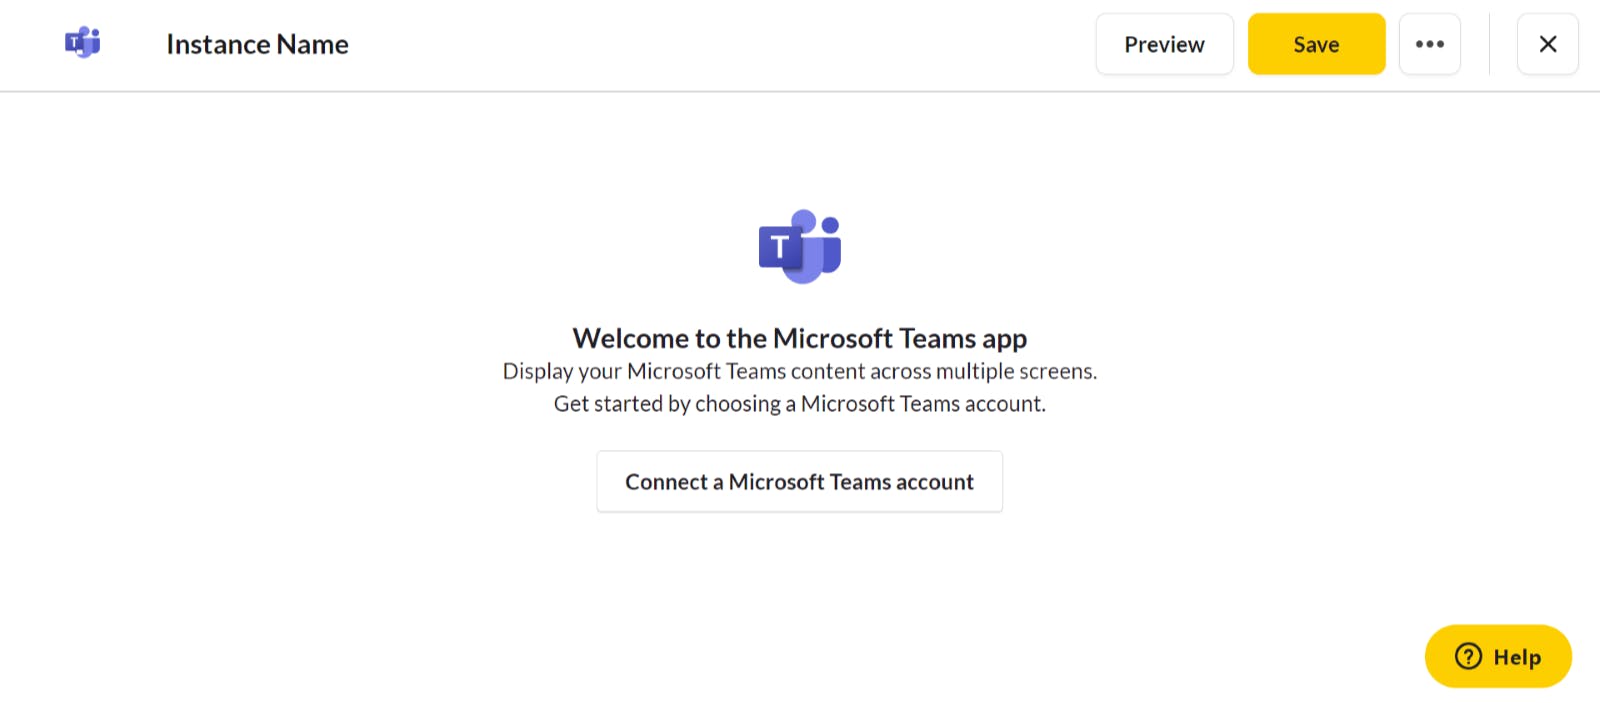 Microsoft Teams app